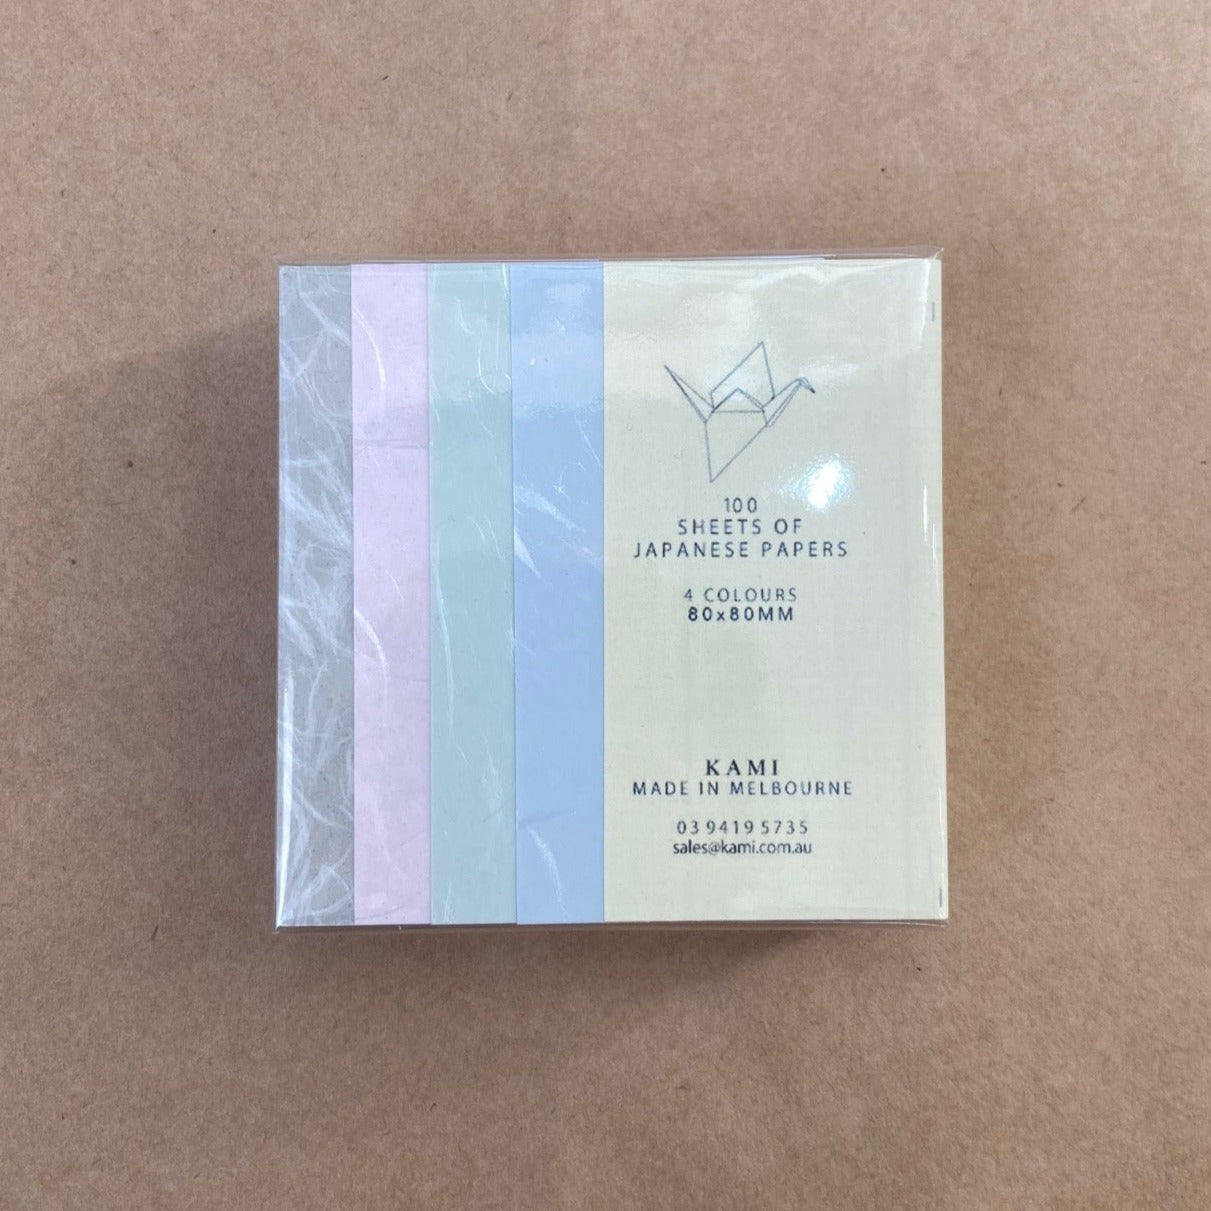 Origami Packs | 4 colour plain 80x80mm